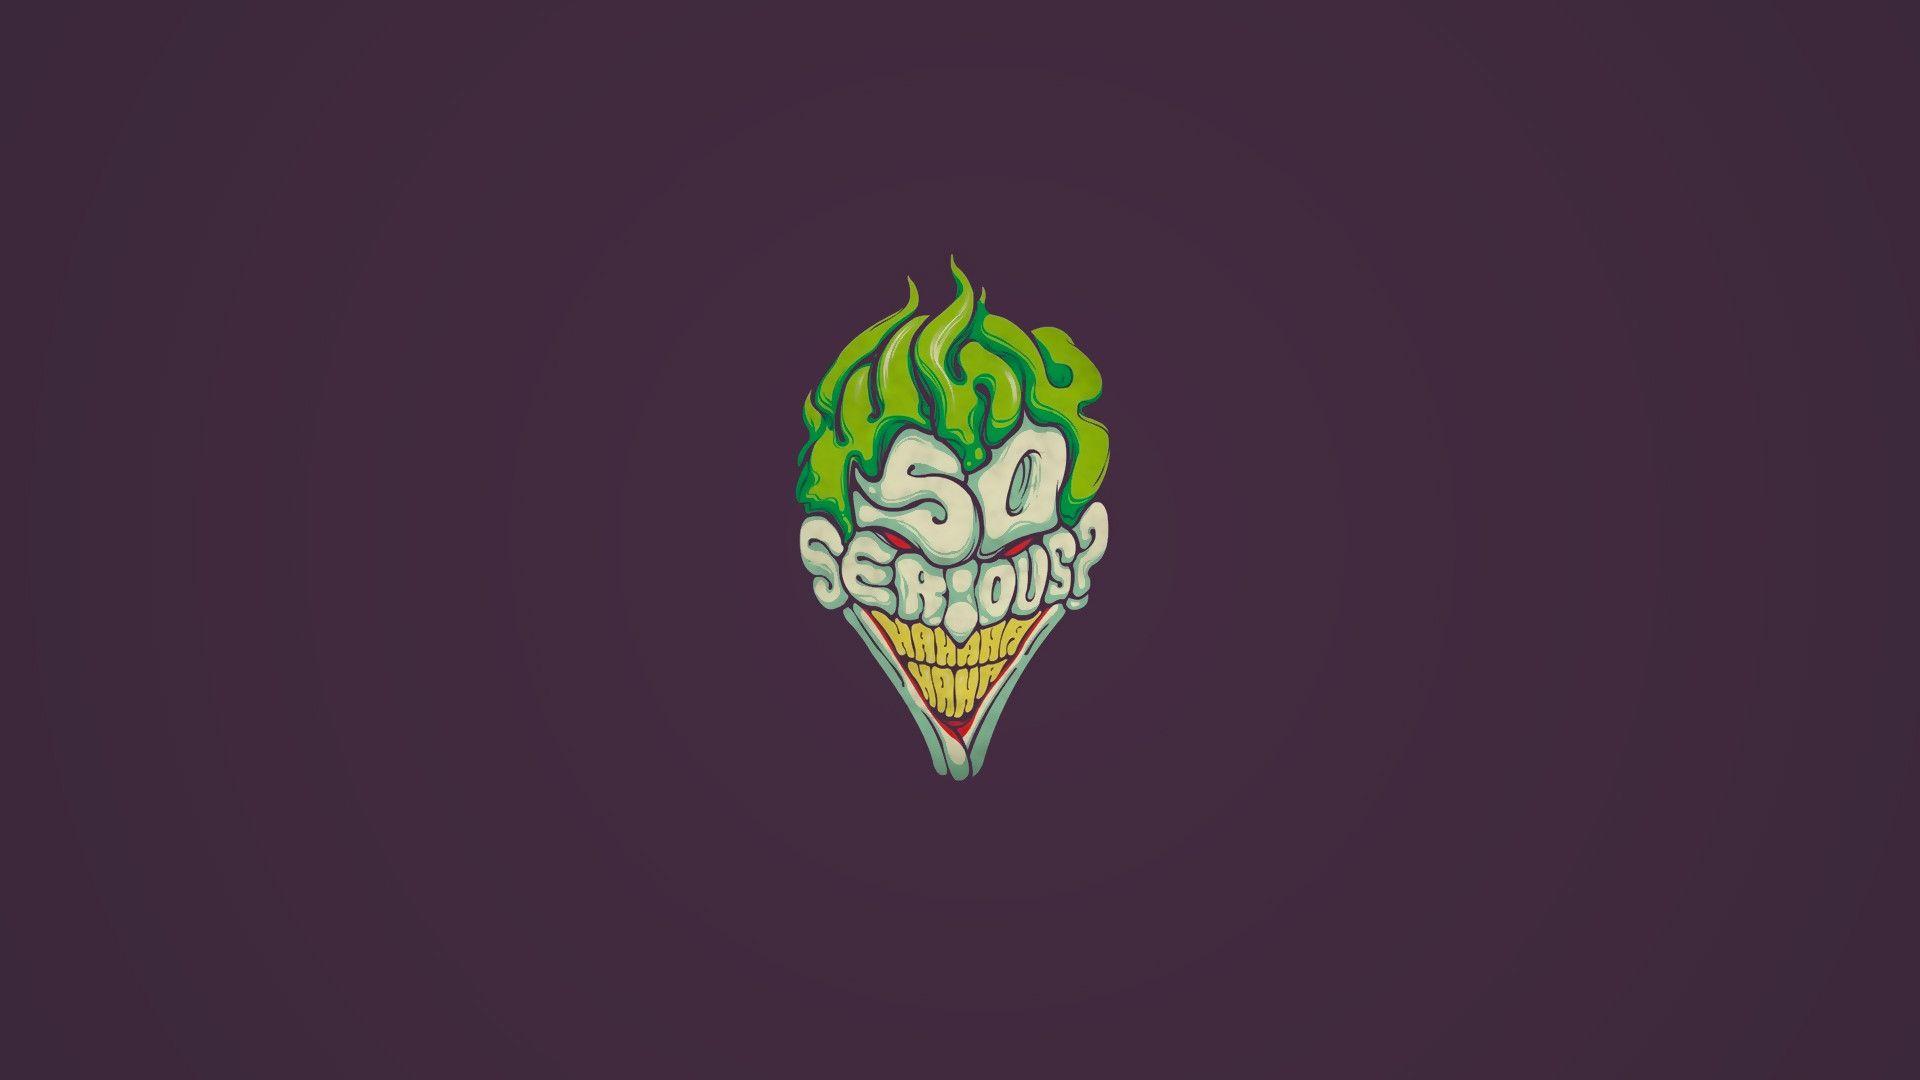 Minimalist Joker Wallpapers - Top Free Minimalist Joker Backgrounds ...